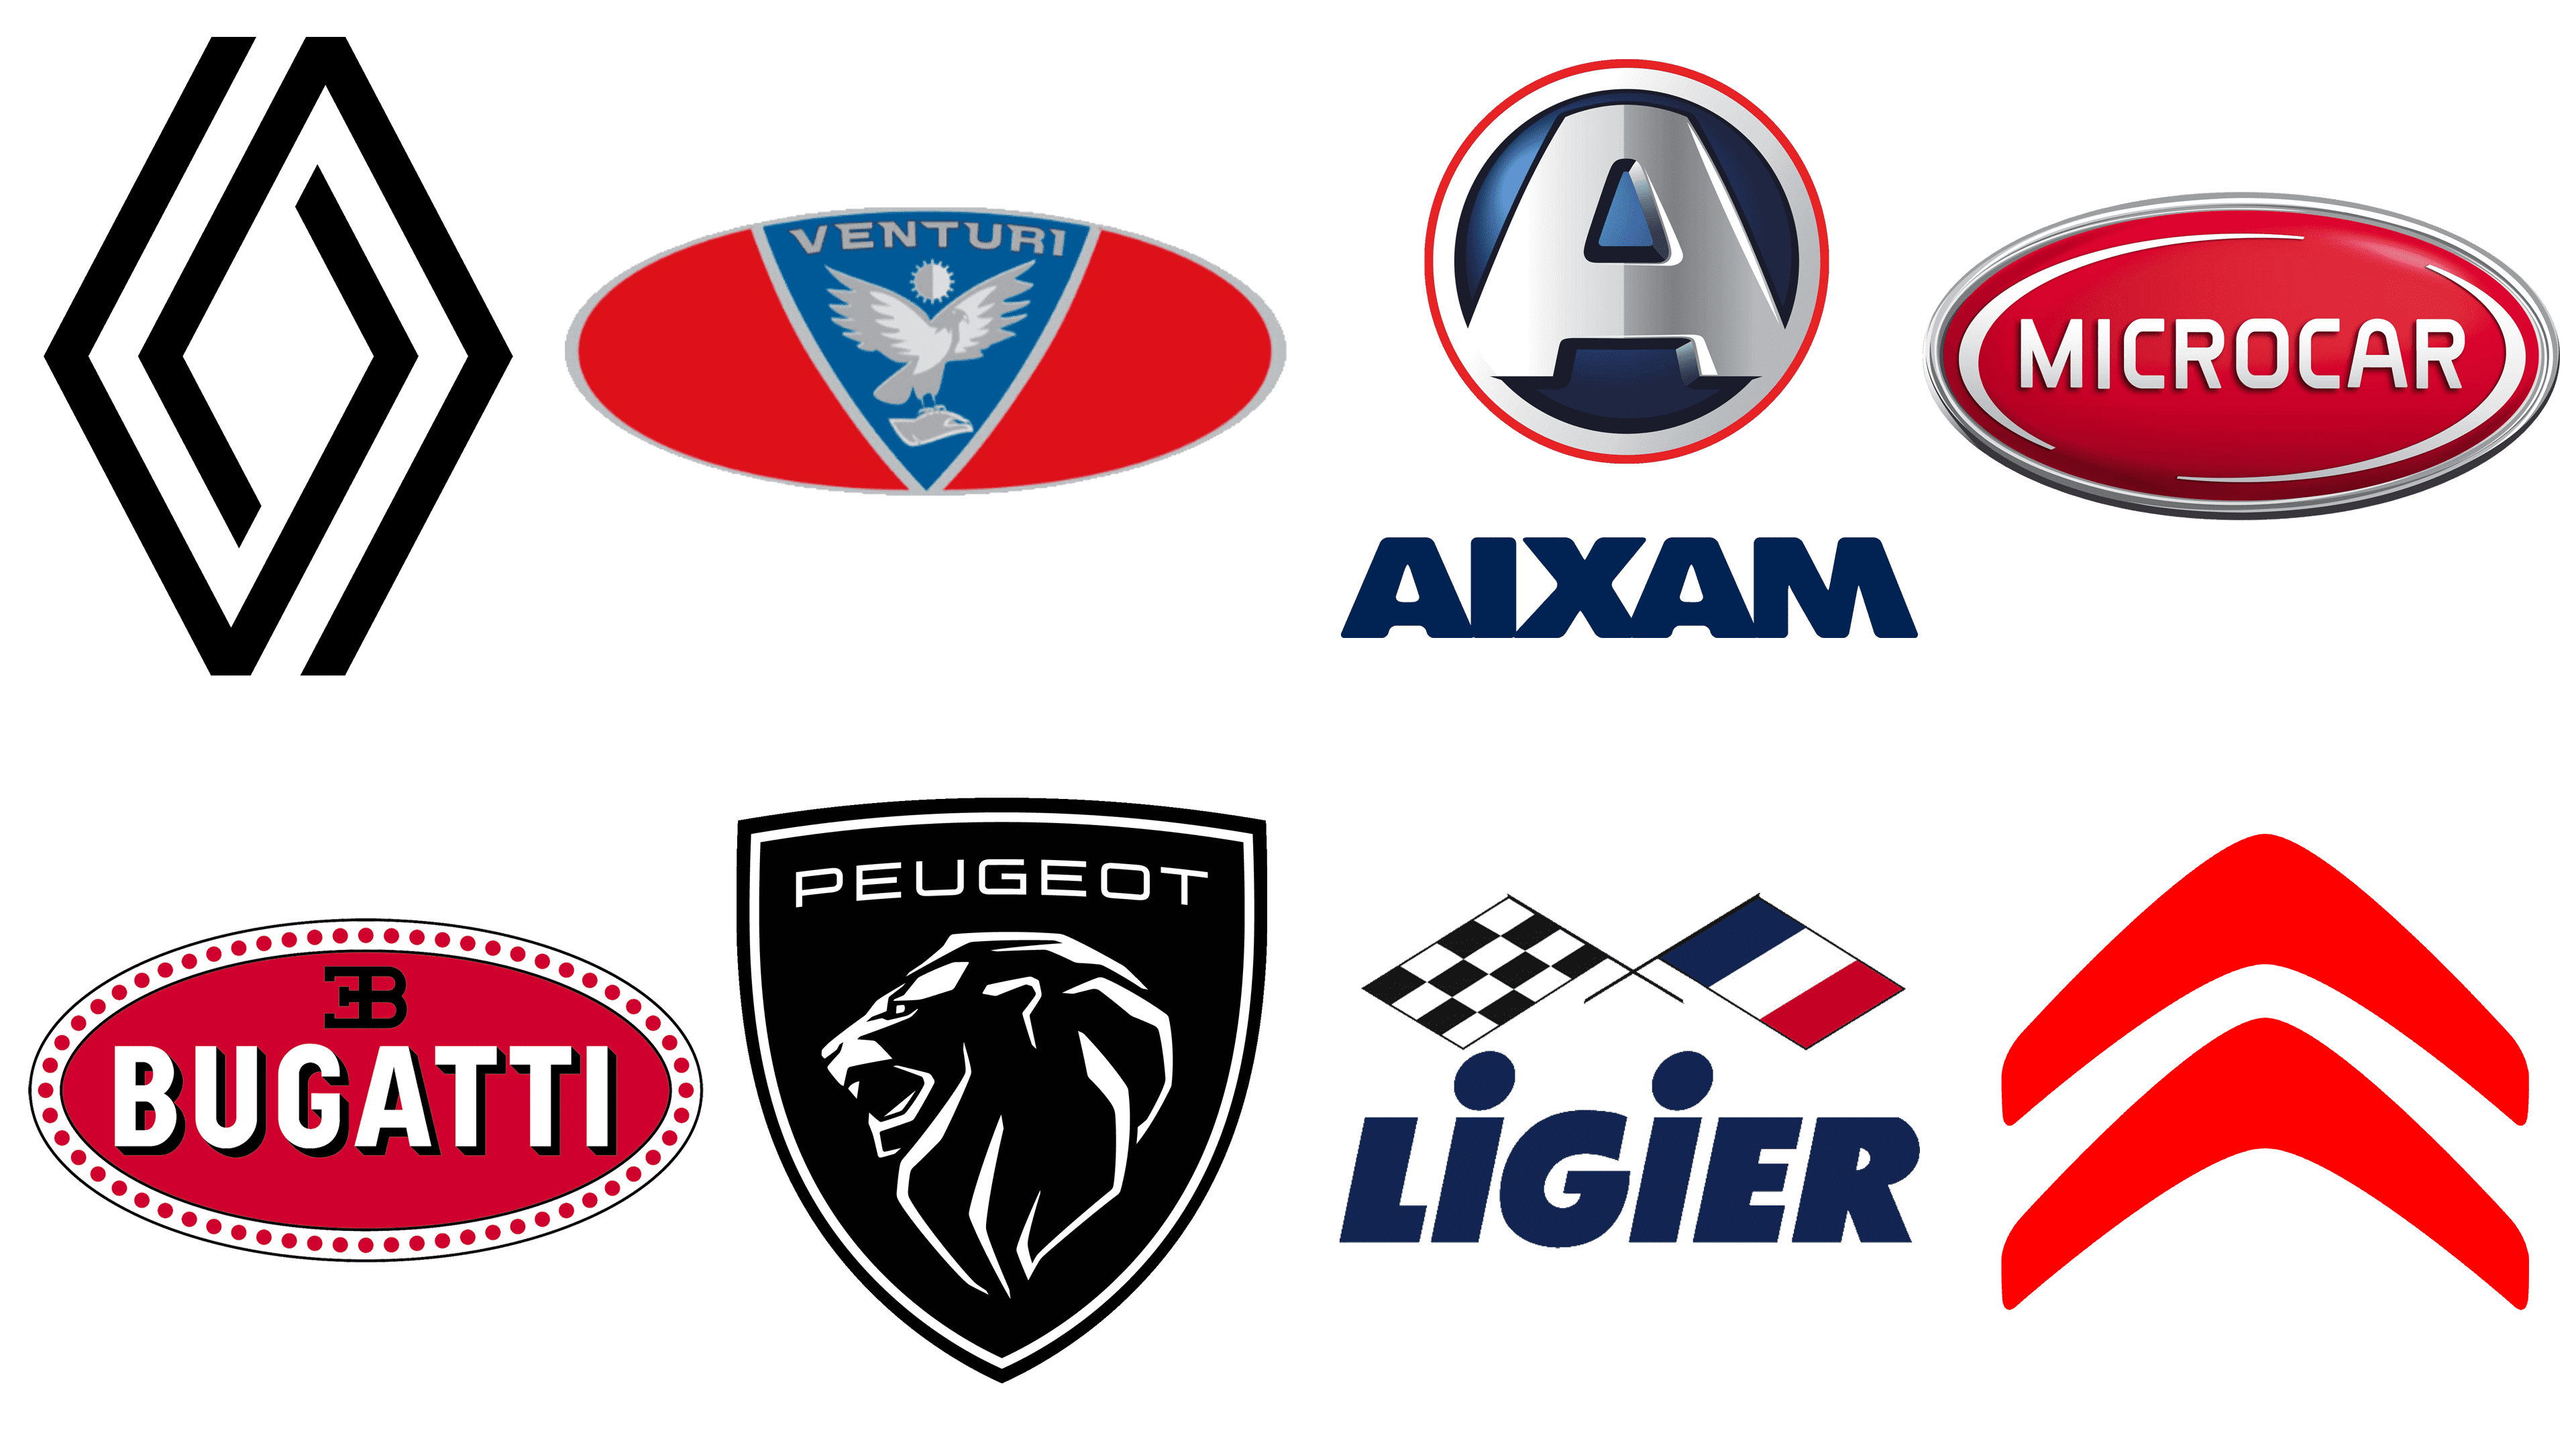 french car symbols and names